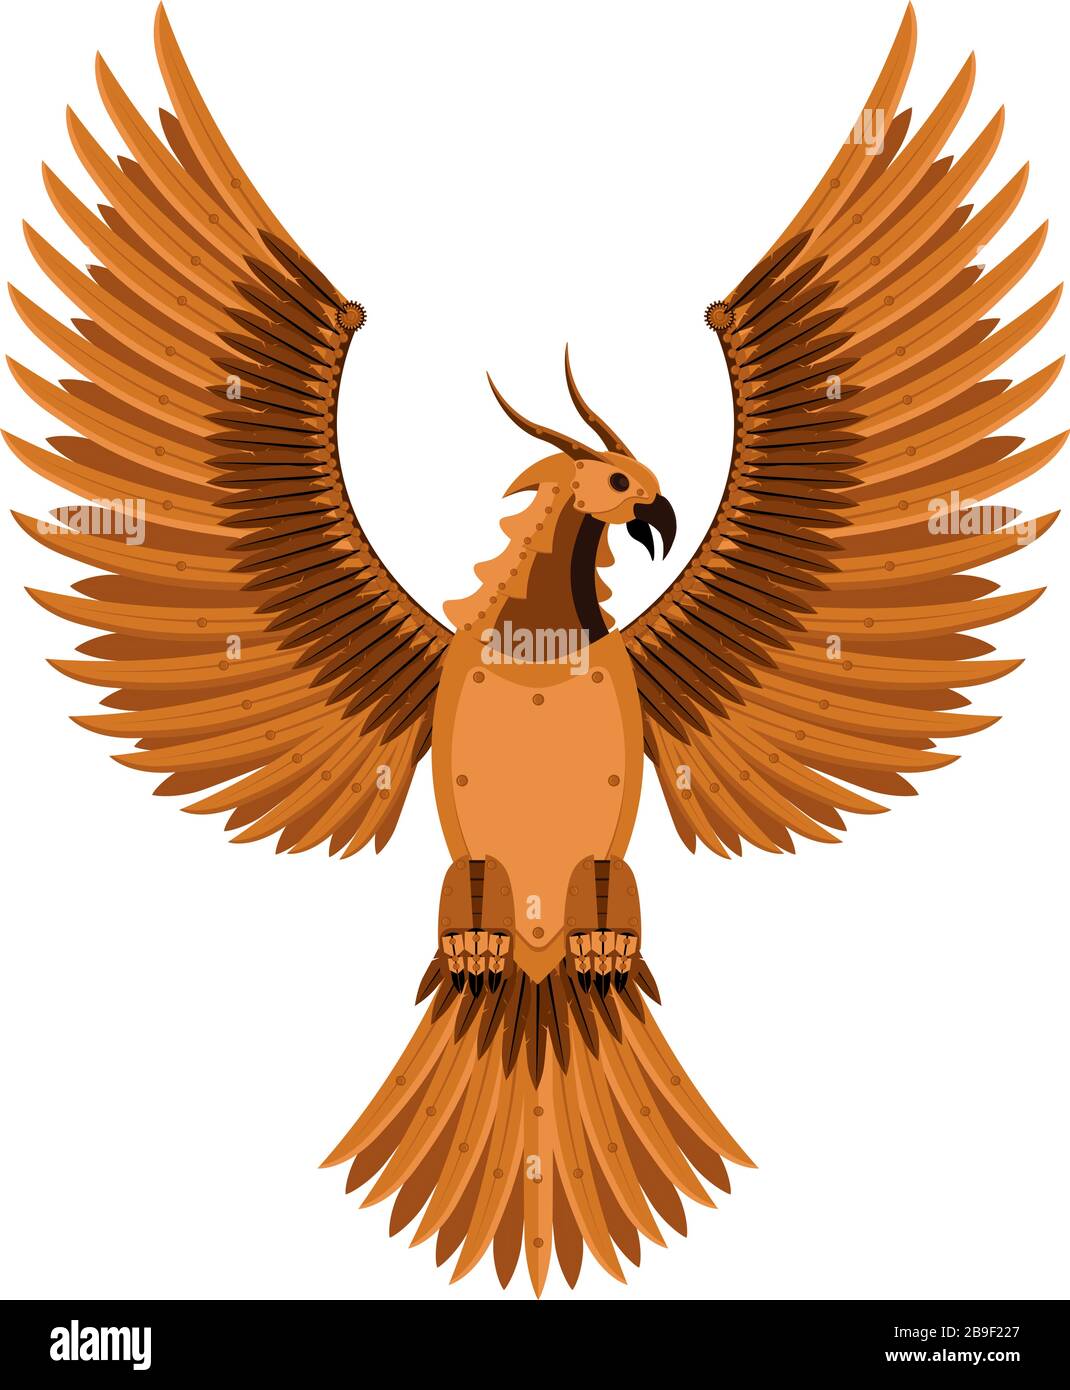 Fantastic Phoenix bird of prey in steam punk style. Vector illustration. Stock Vector